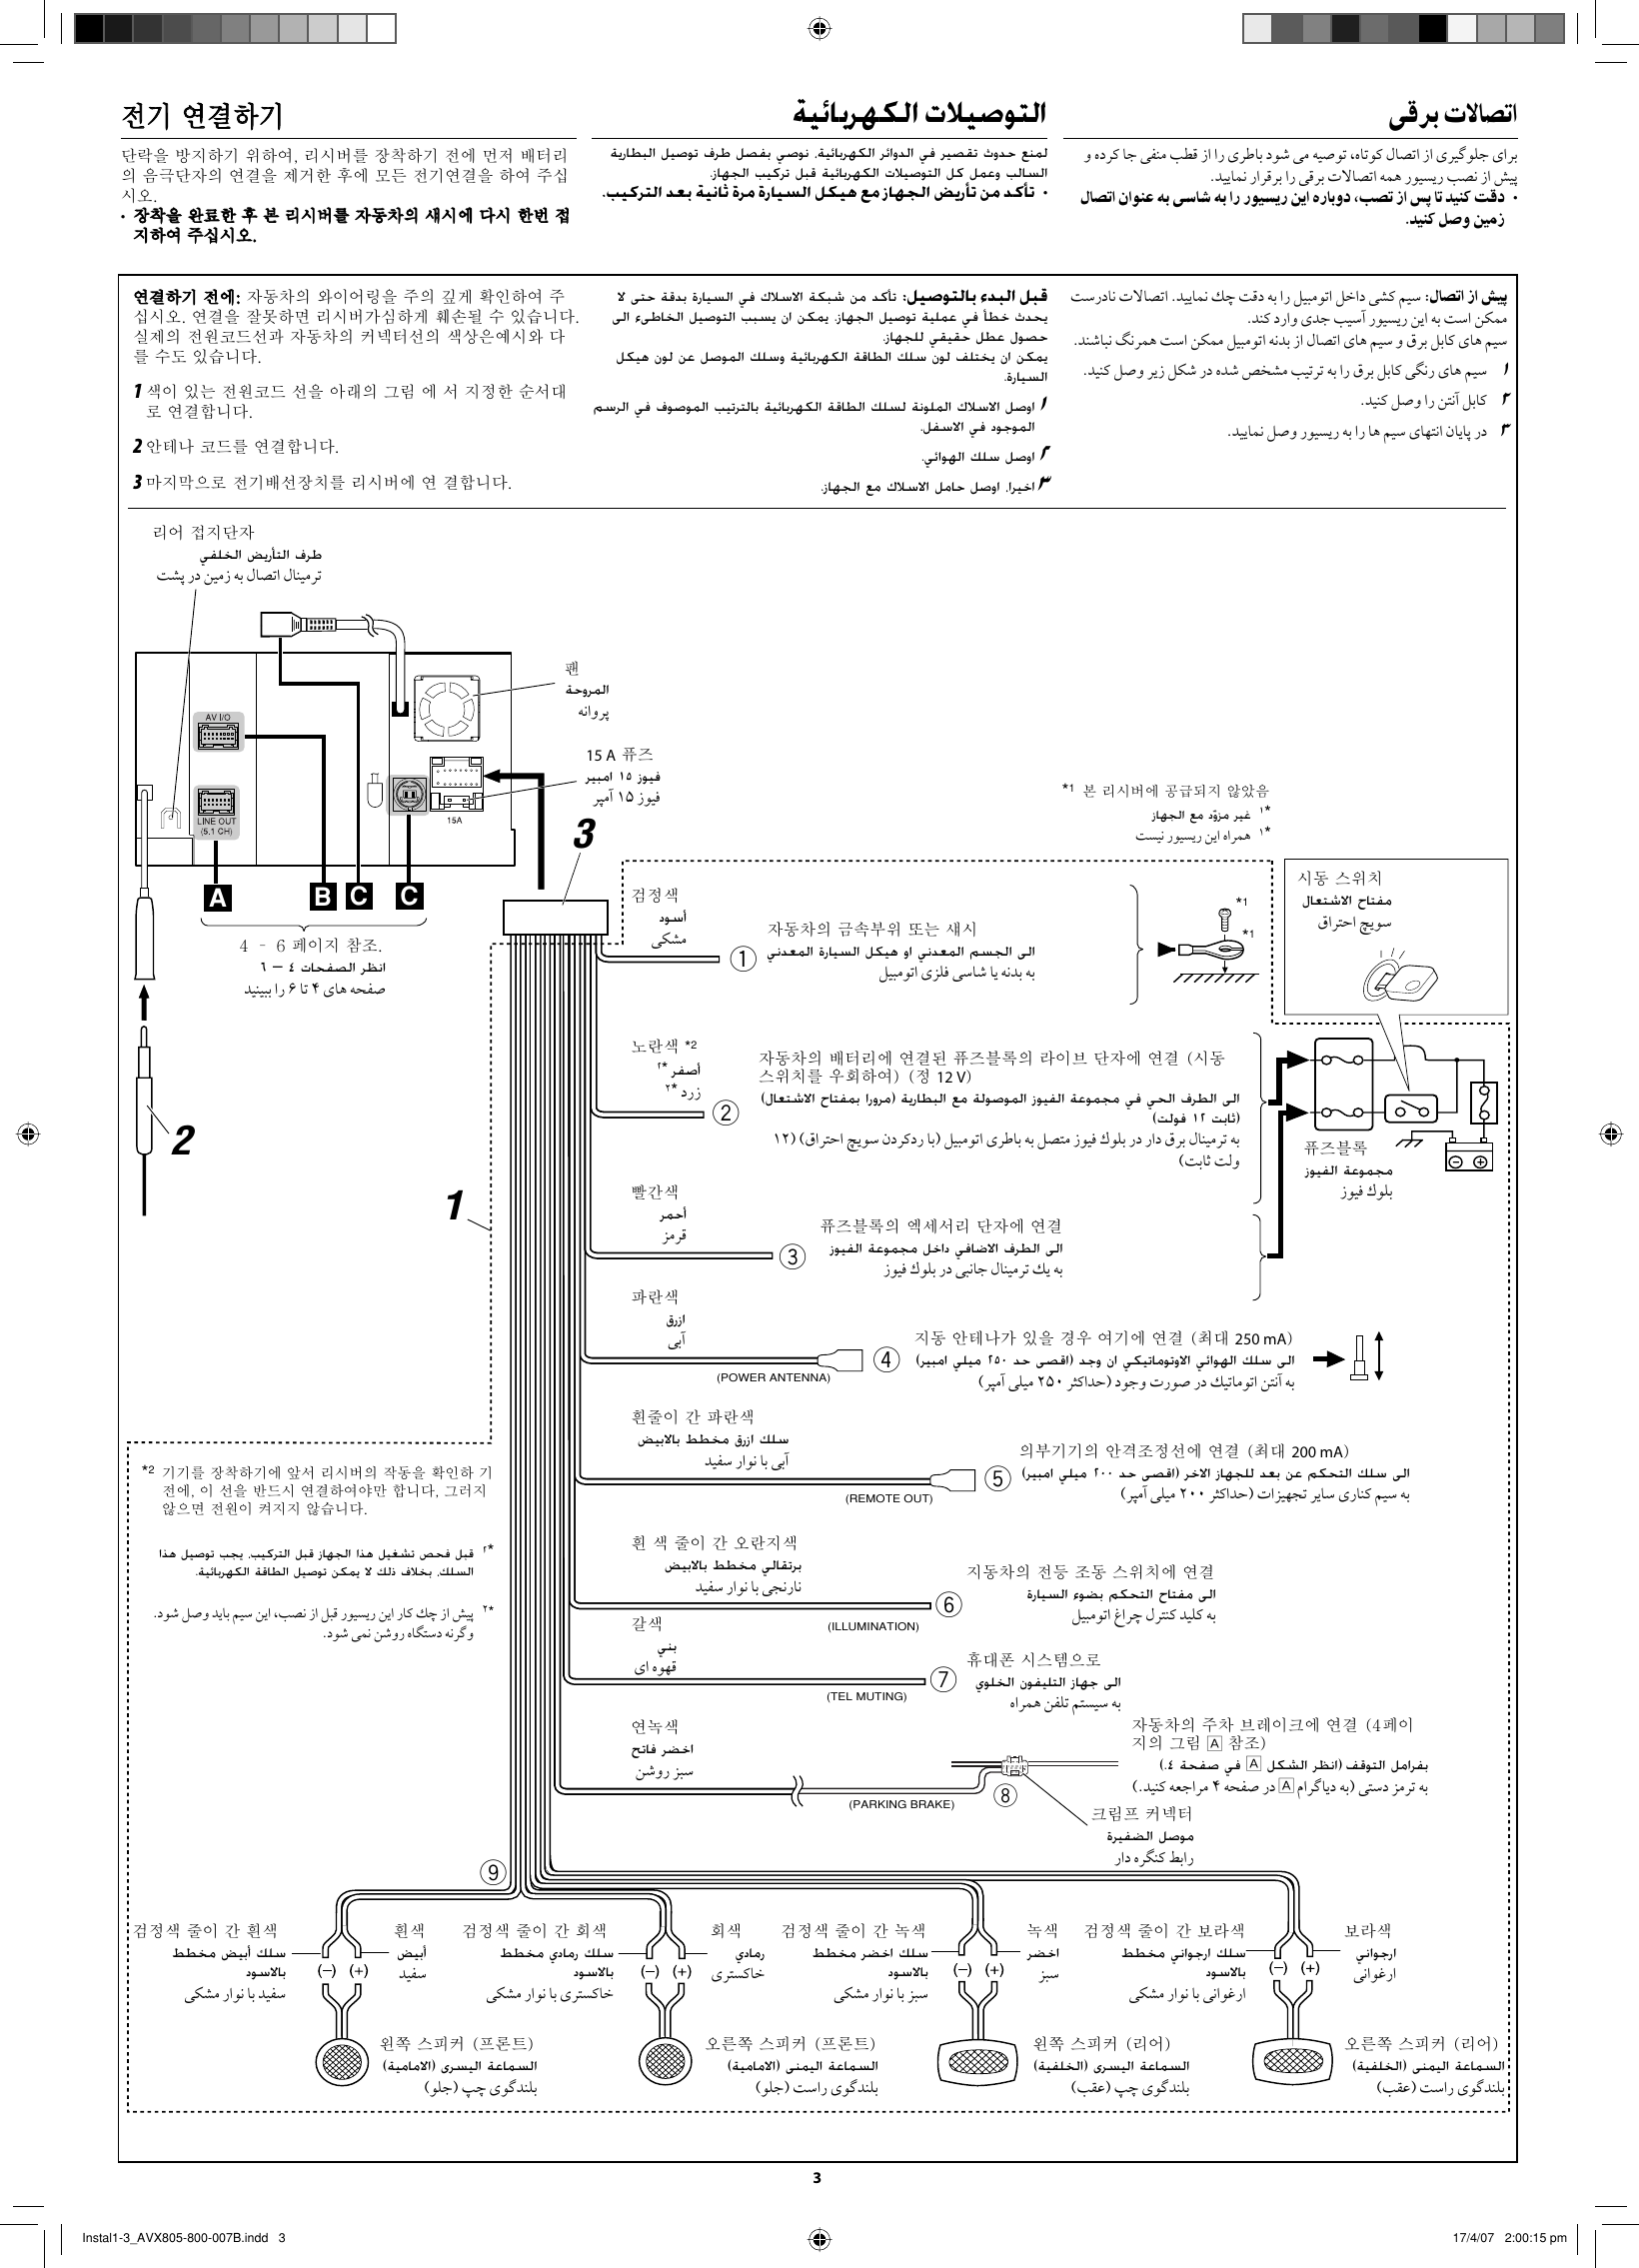 Page 3 of 6 - JVC KW-AVX800U KW-AVX805/KW-AVX800[U] User Manual INSTALLATION (Asia) LVT1667-007B